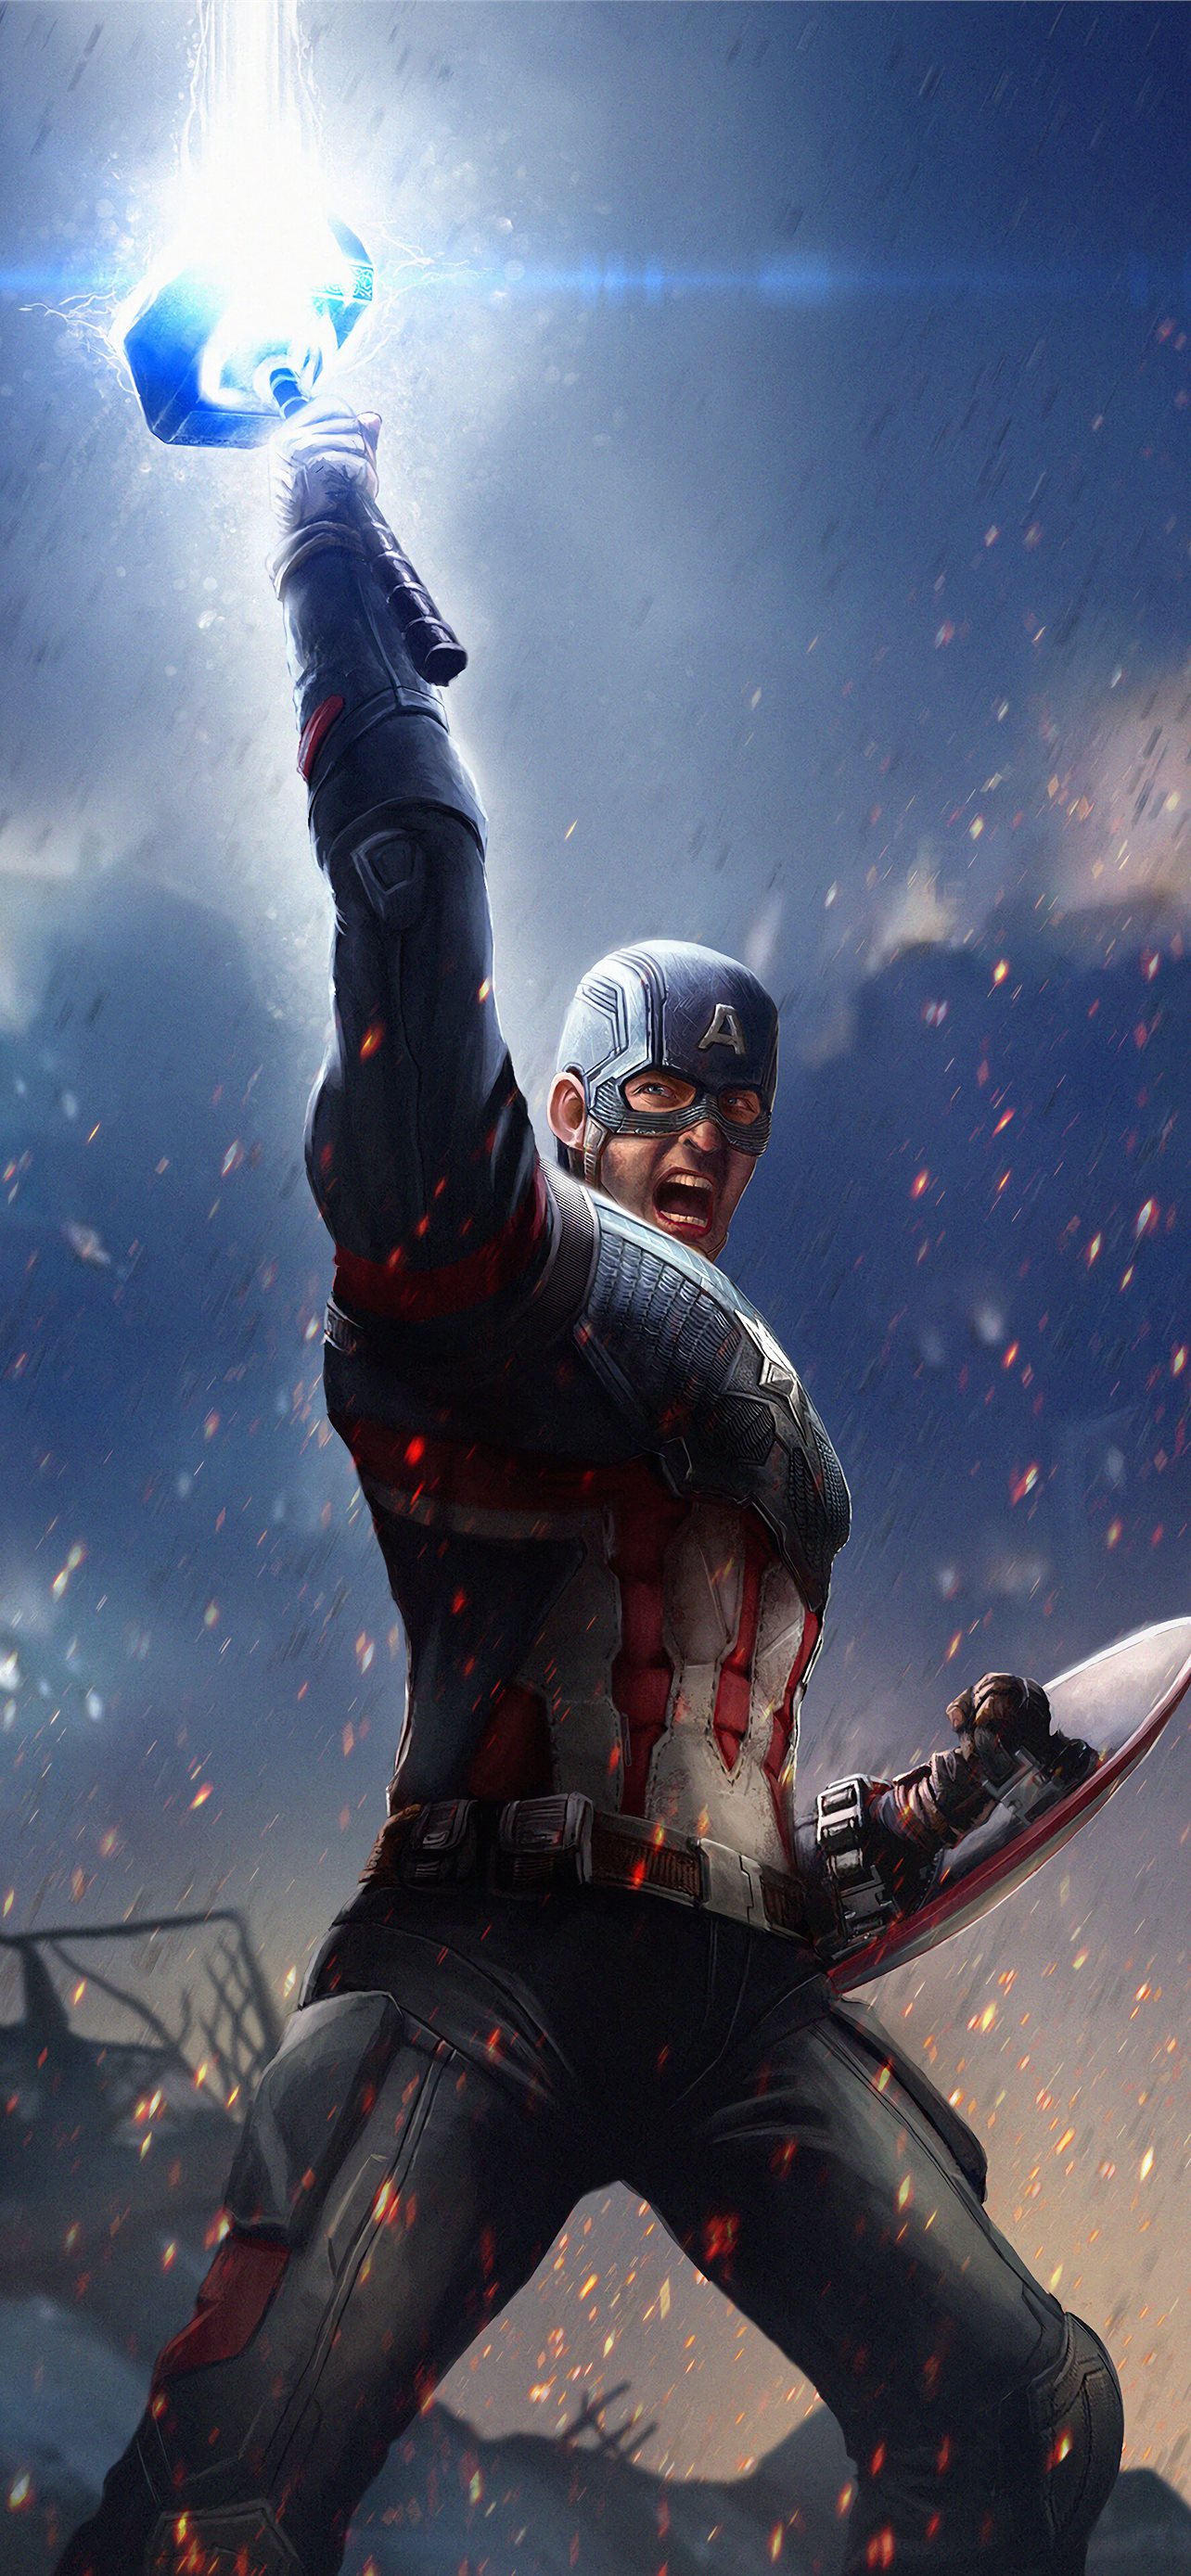 Captain America Lift Thor Hammer IPhone Wallpaper  IPhone Wallpapers   iPhone Wallpapers